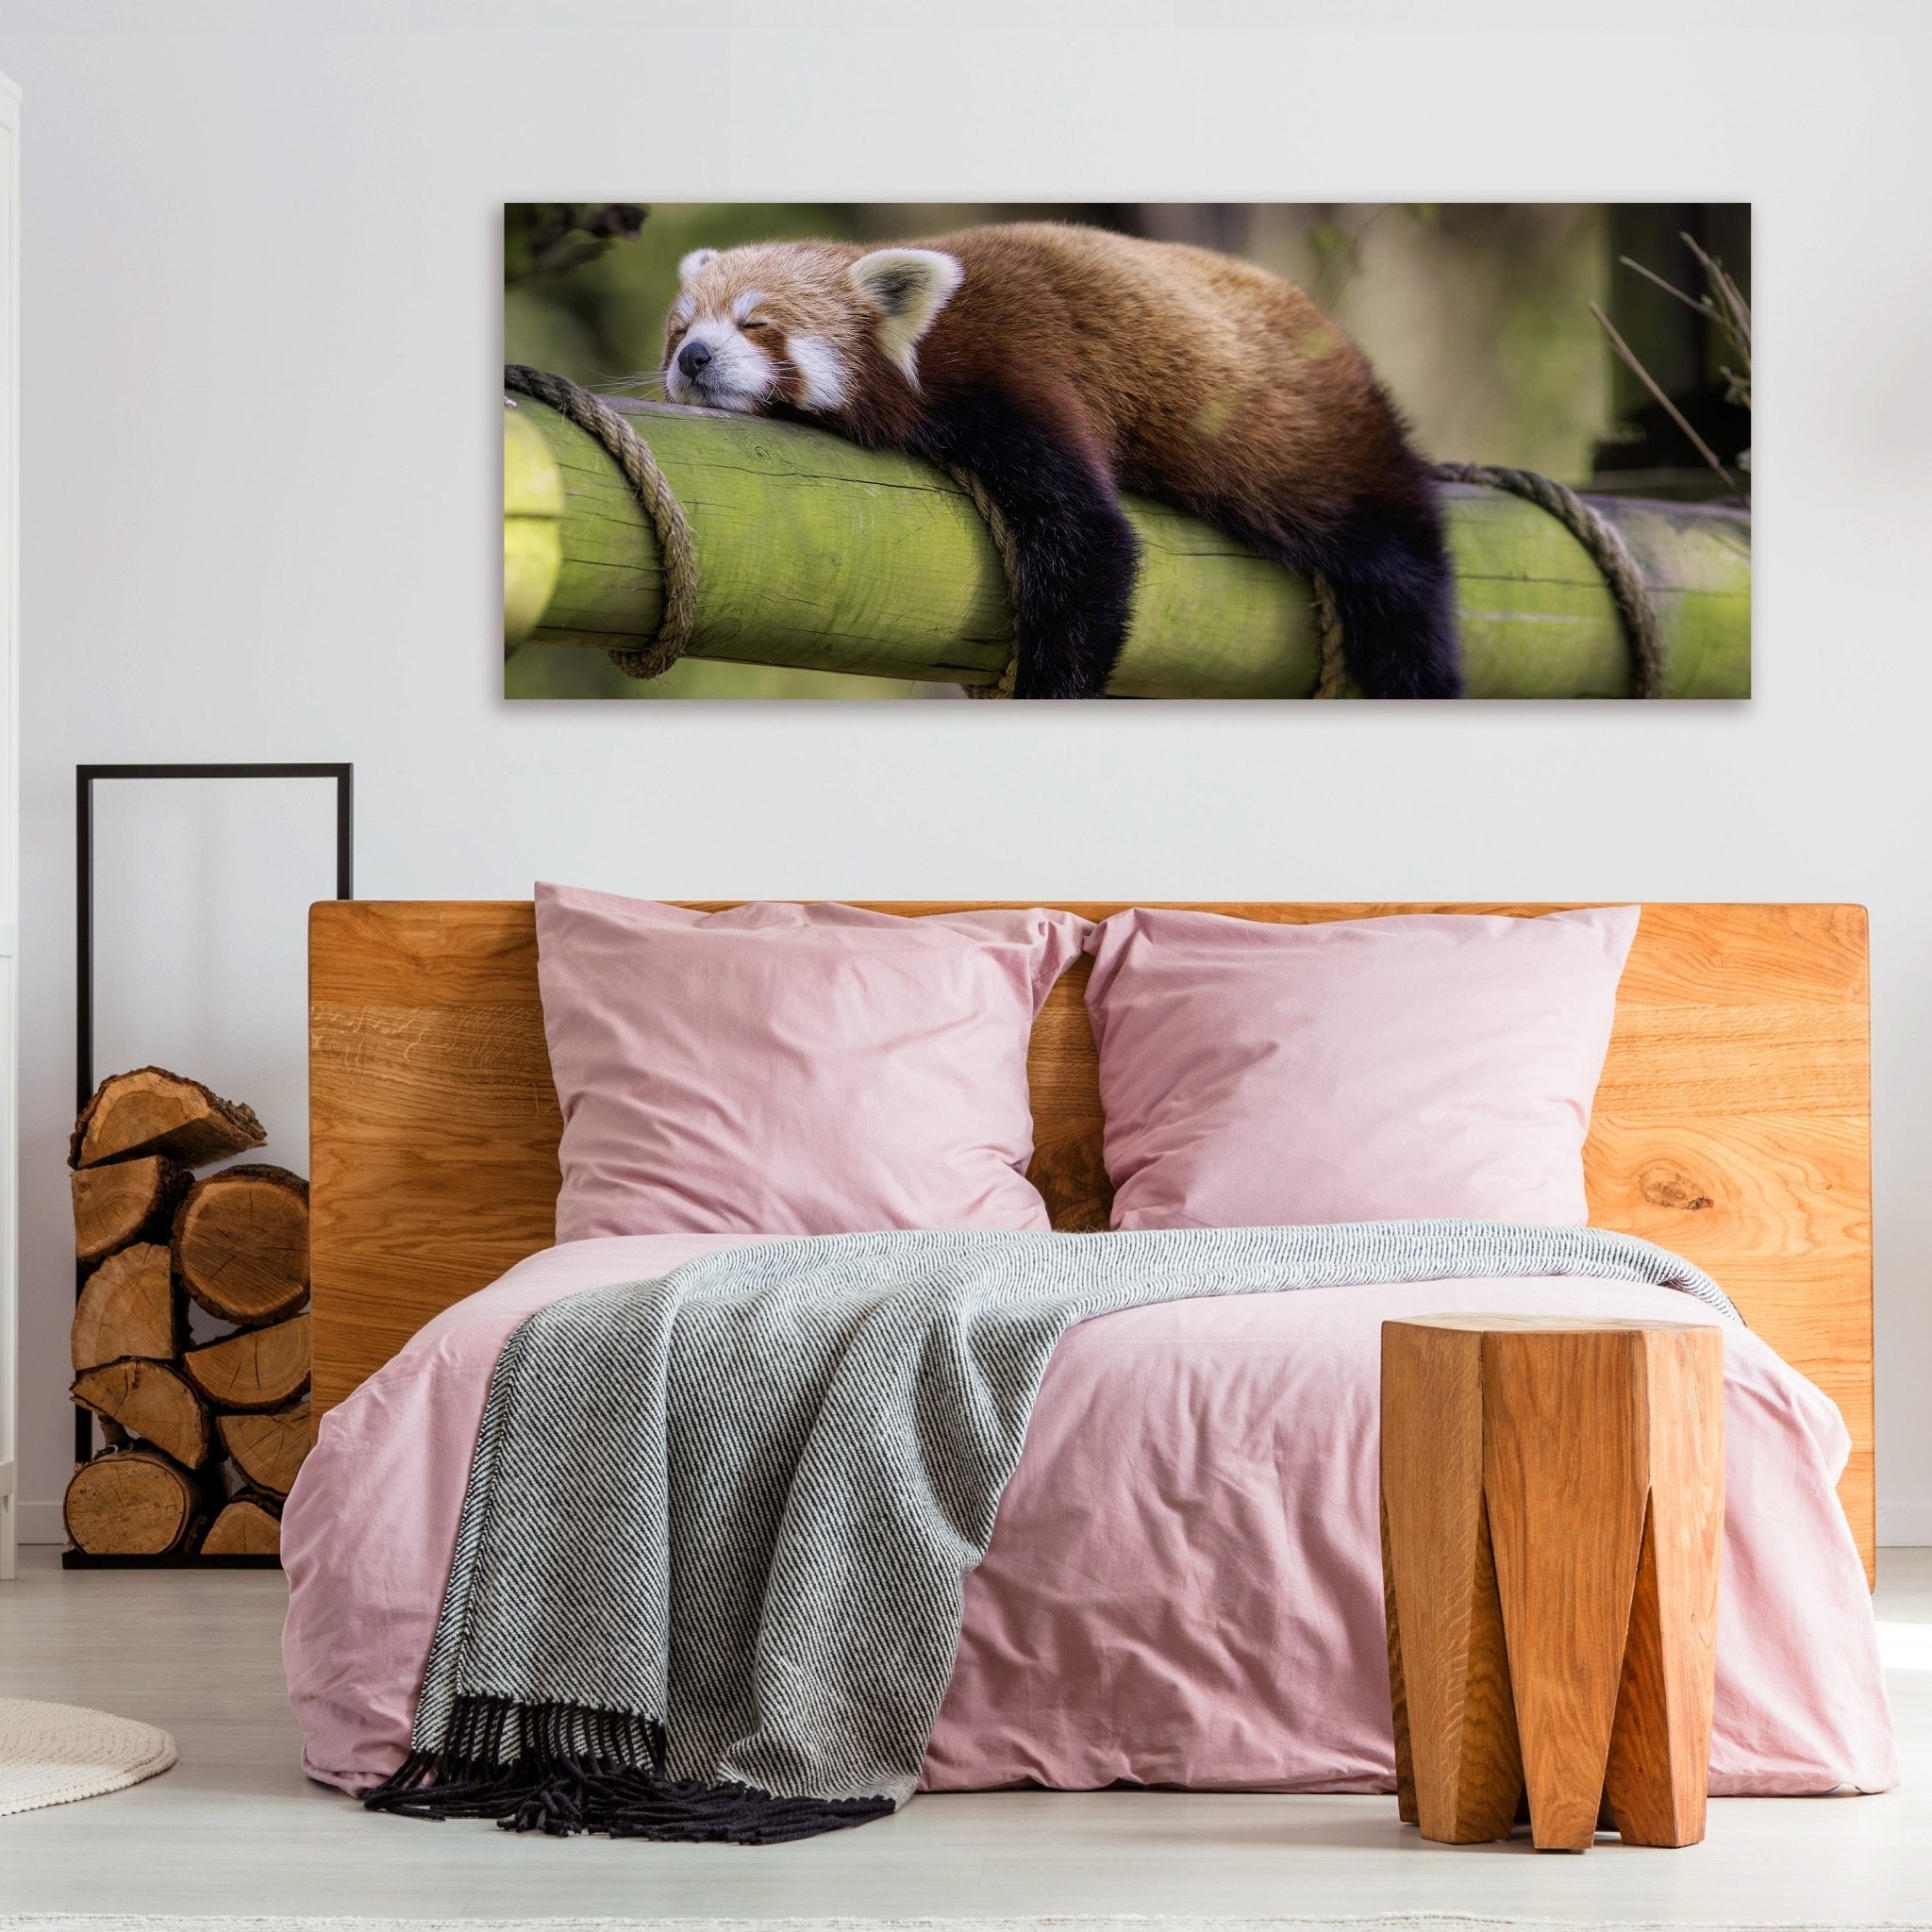 Leinwandbild schlafender roter Panda, Bambus M1114 kaufen - Bild 3